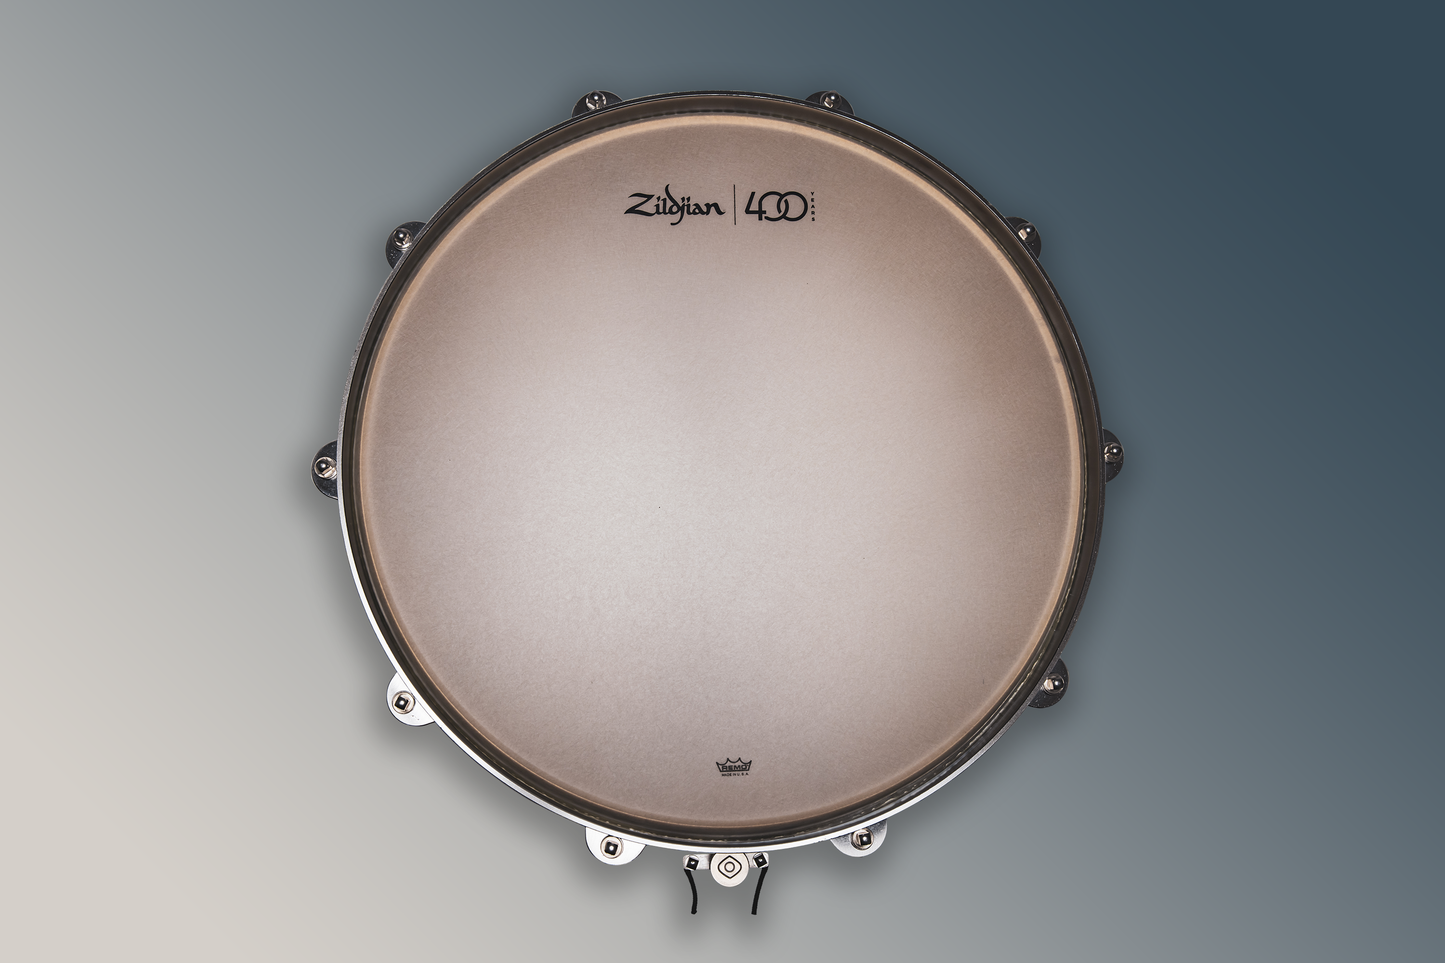 Zildjian 6.5x14" Limited Edition 400th Anniversary Snare Drum